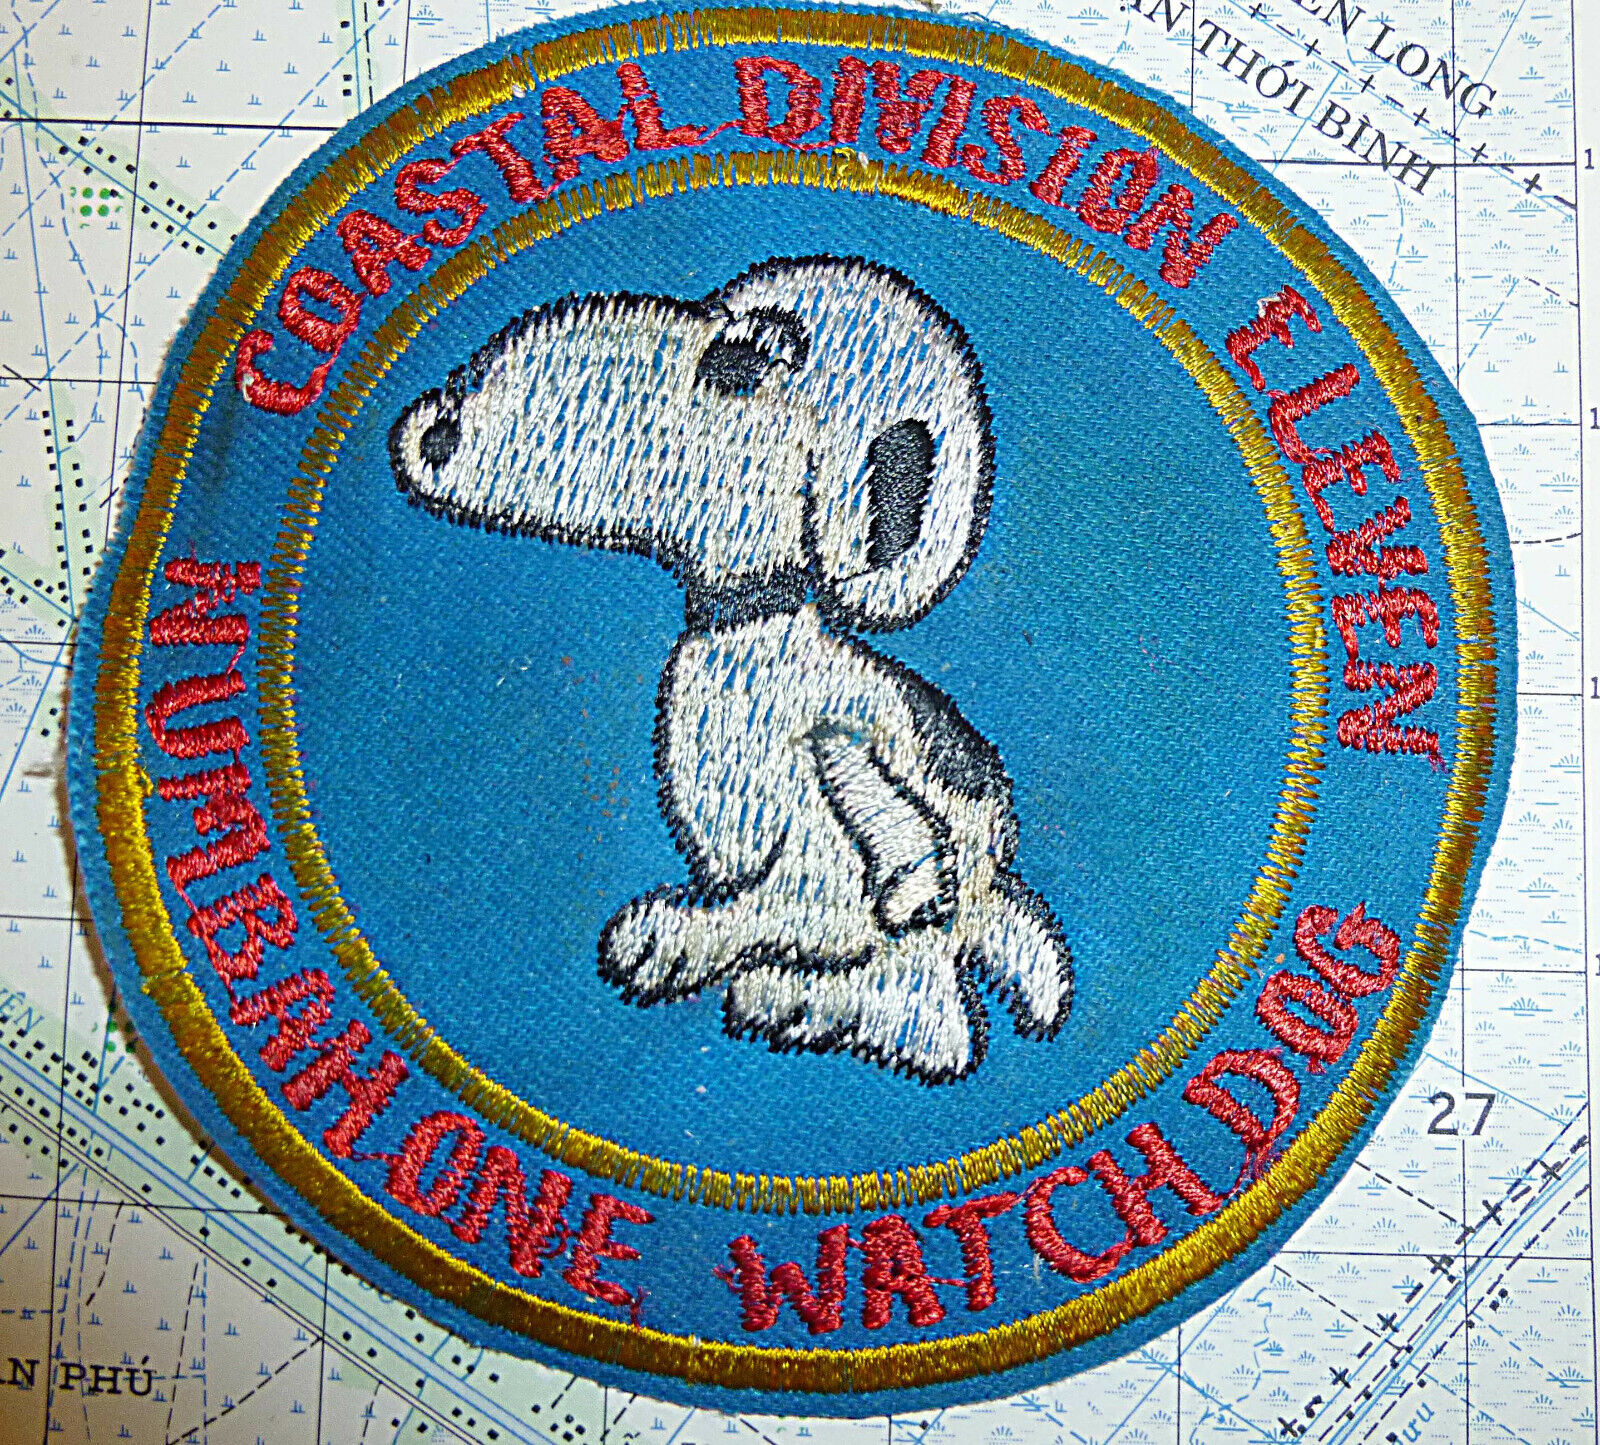 VNBP Patch - SNOOPY - NUMBER ONE WATCH DOG - COSFLOT 11 - Vietnam War - V.482